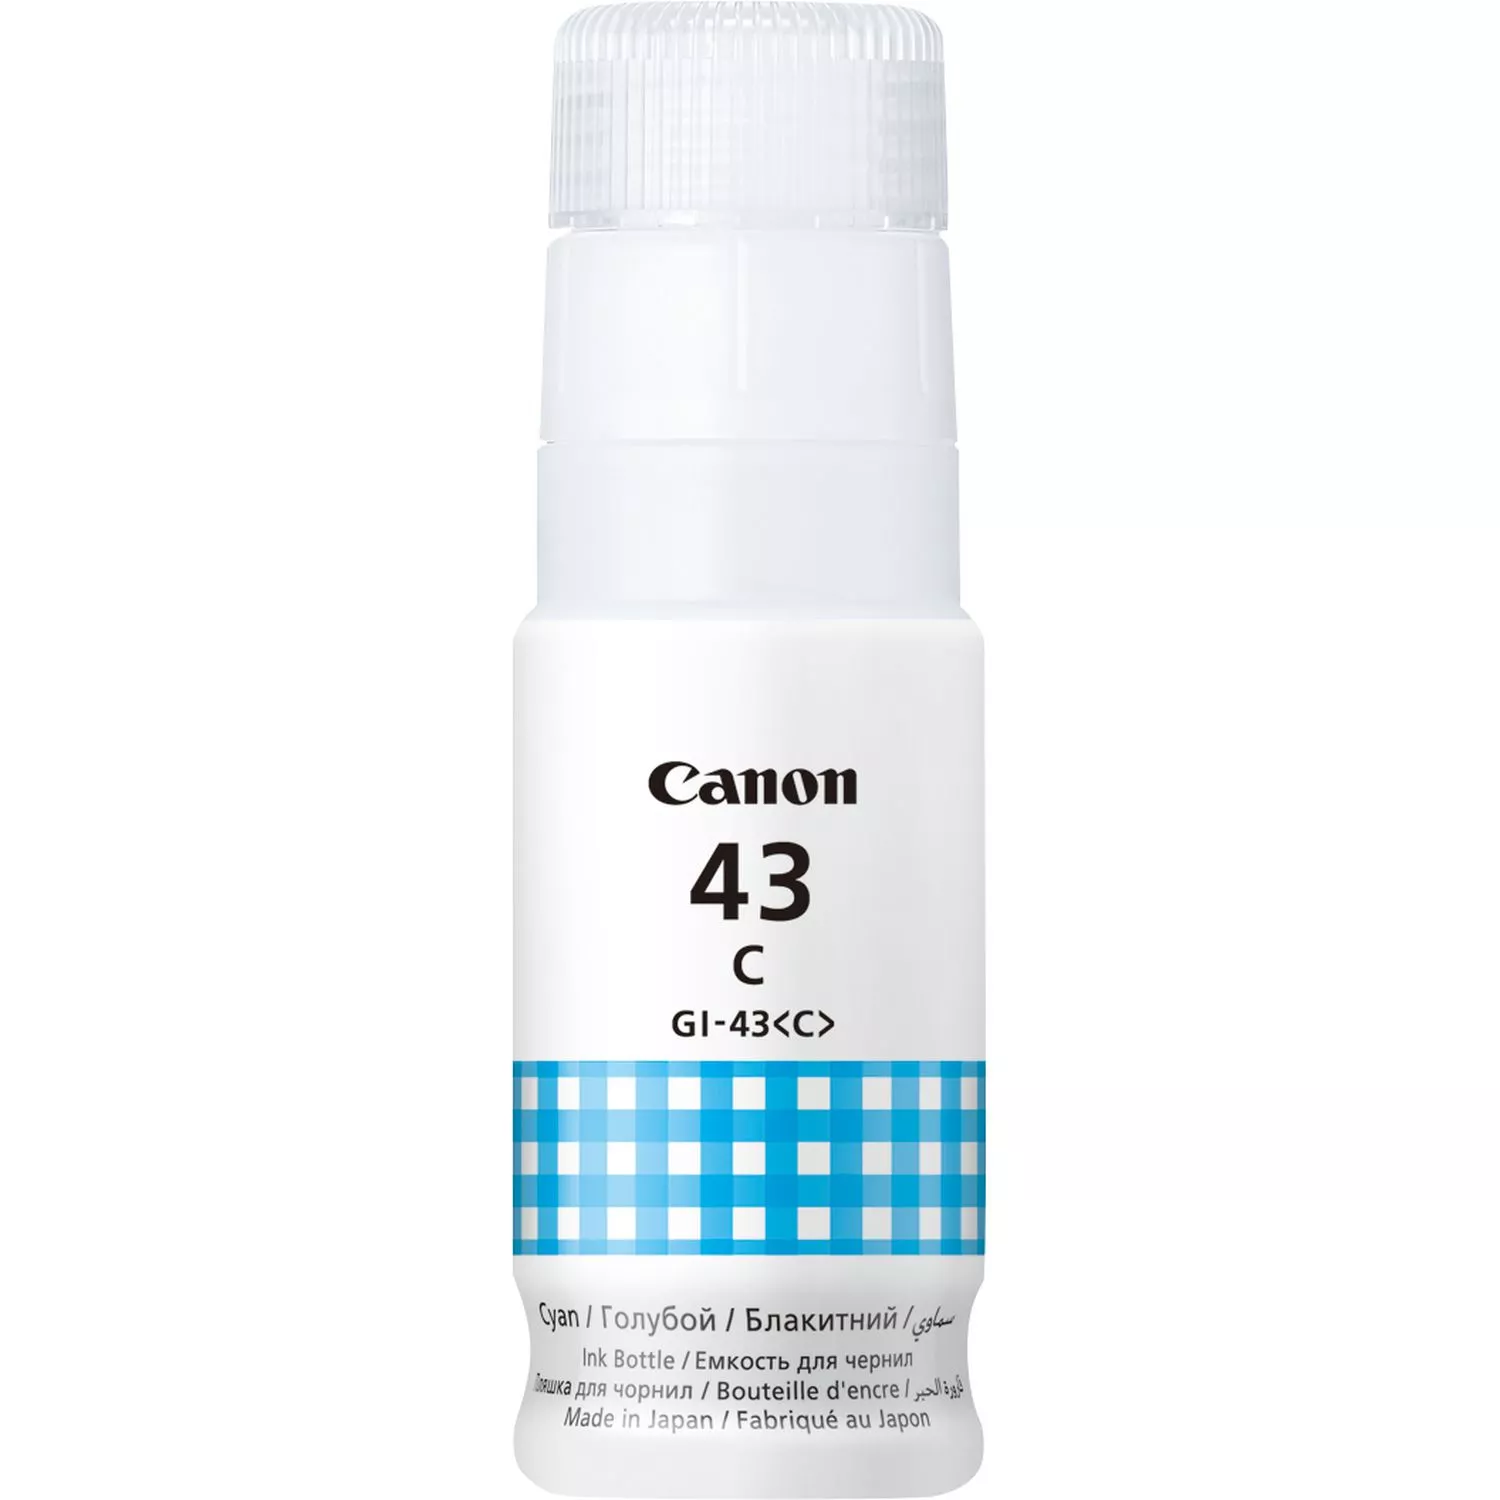 Achat CANON GI-43 C EMB Cyan Ink Bottle au meilleur prix